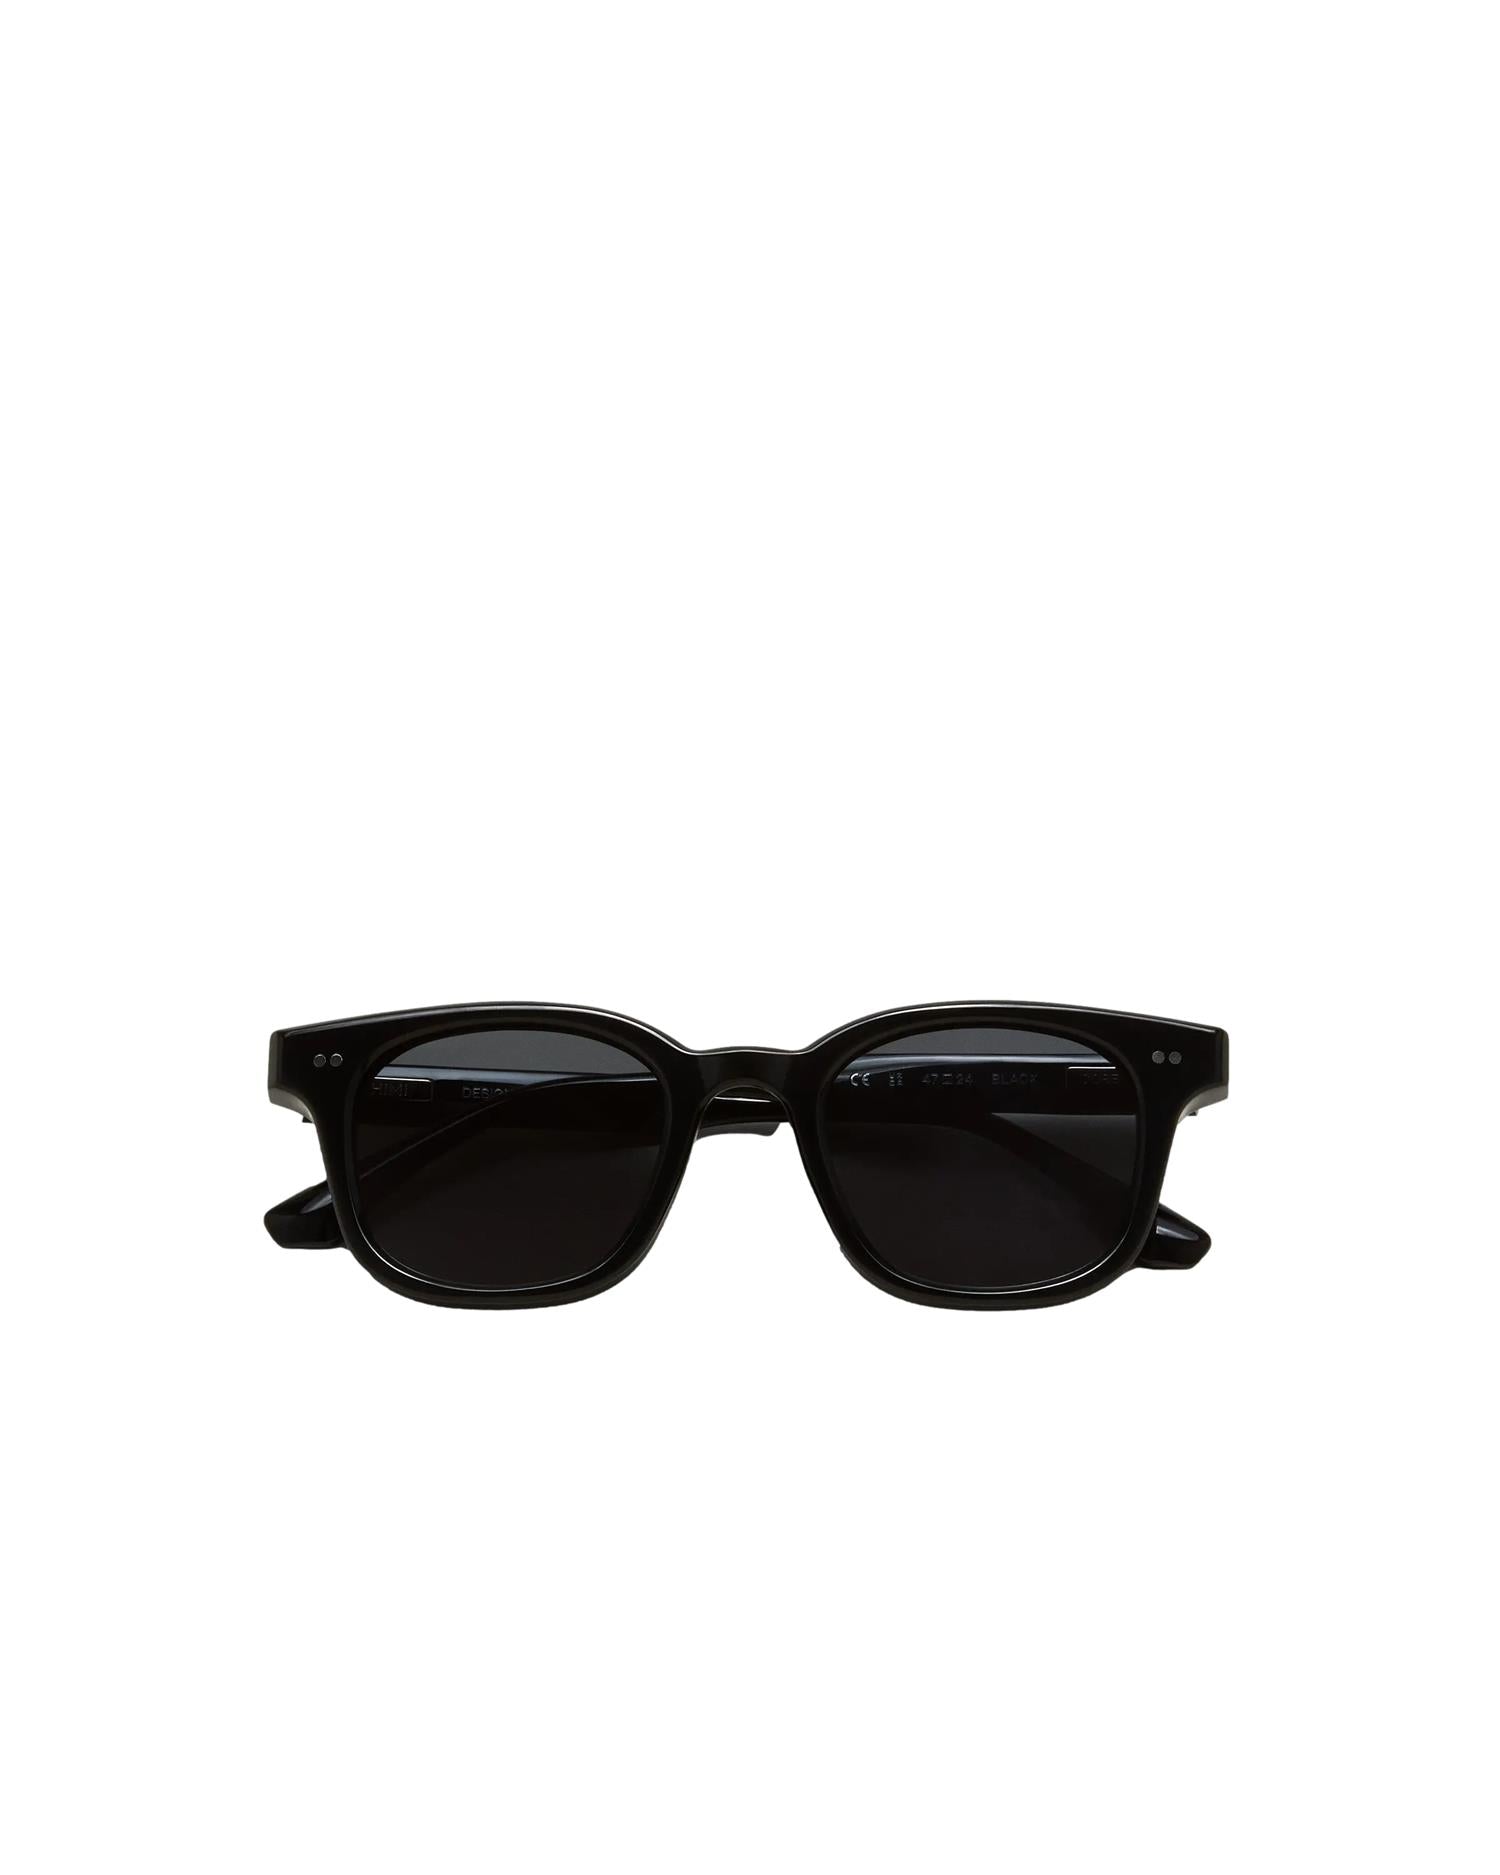 Chimi Eyewear Black 02 Core Solbriller Sort